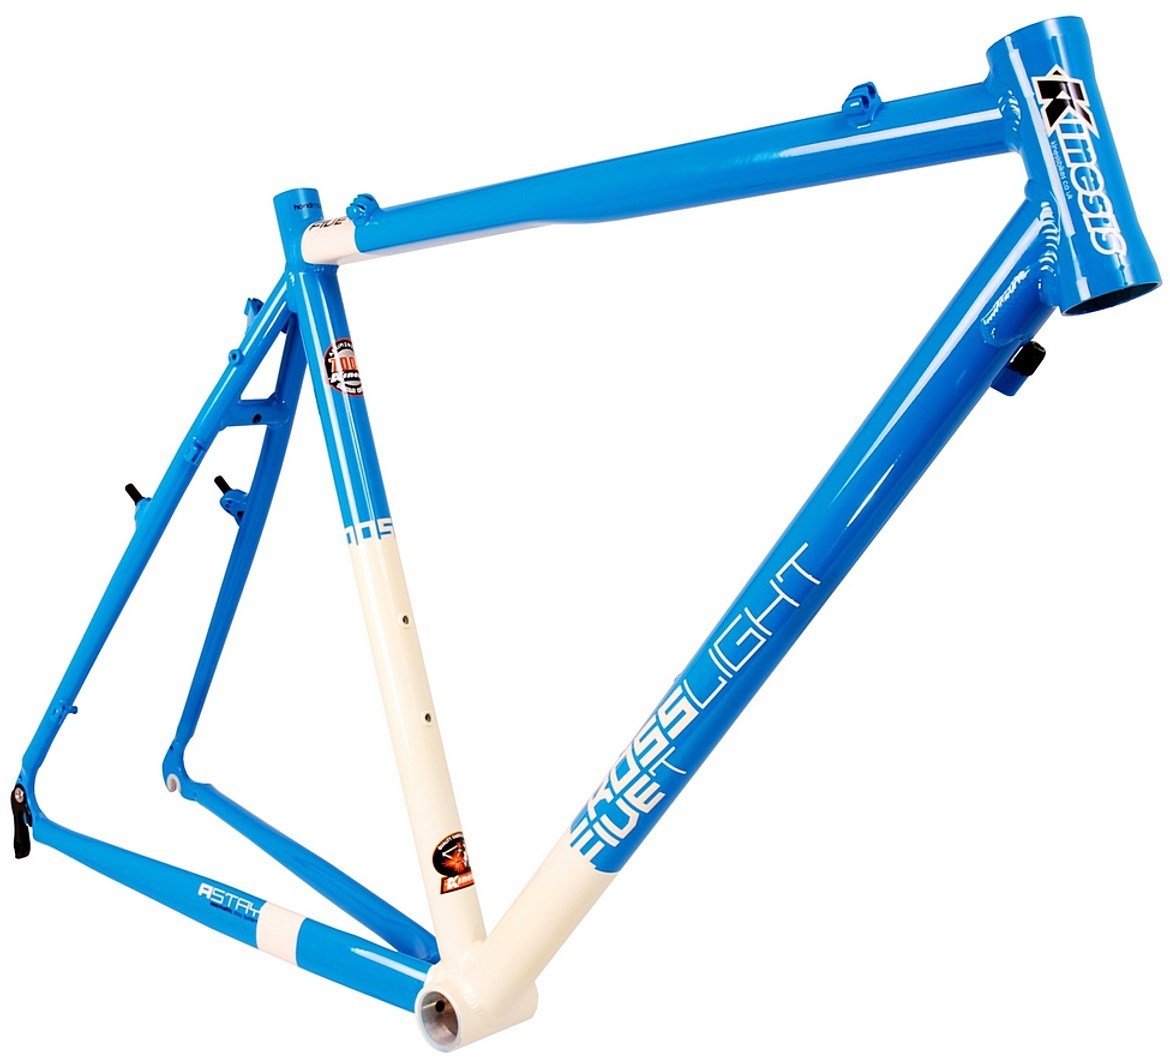 Kinesis Crosslight Five T Cyclocross Frame product image